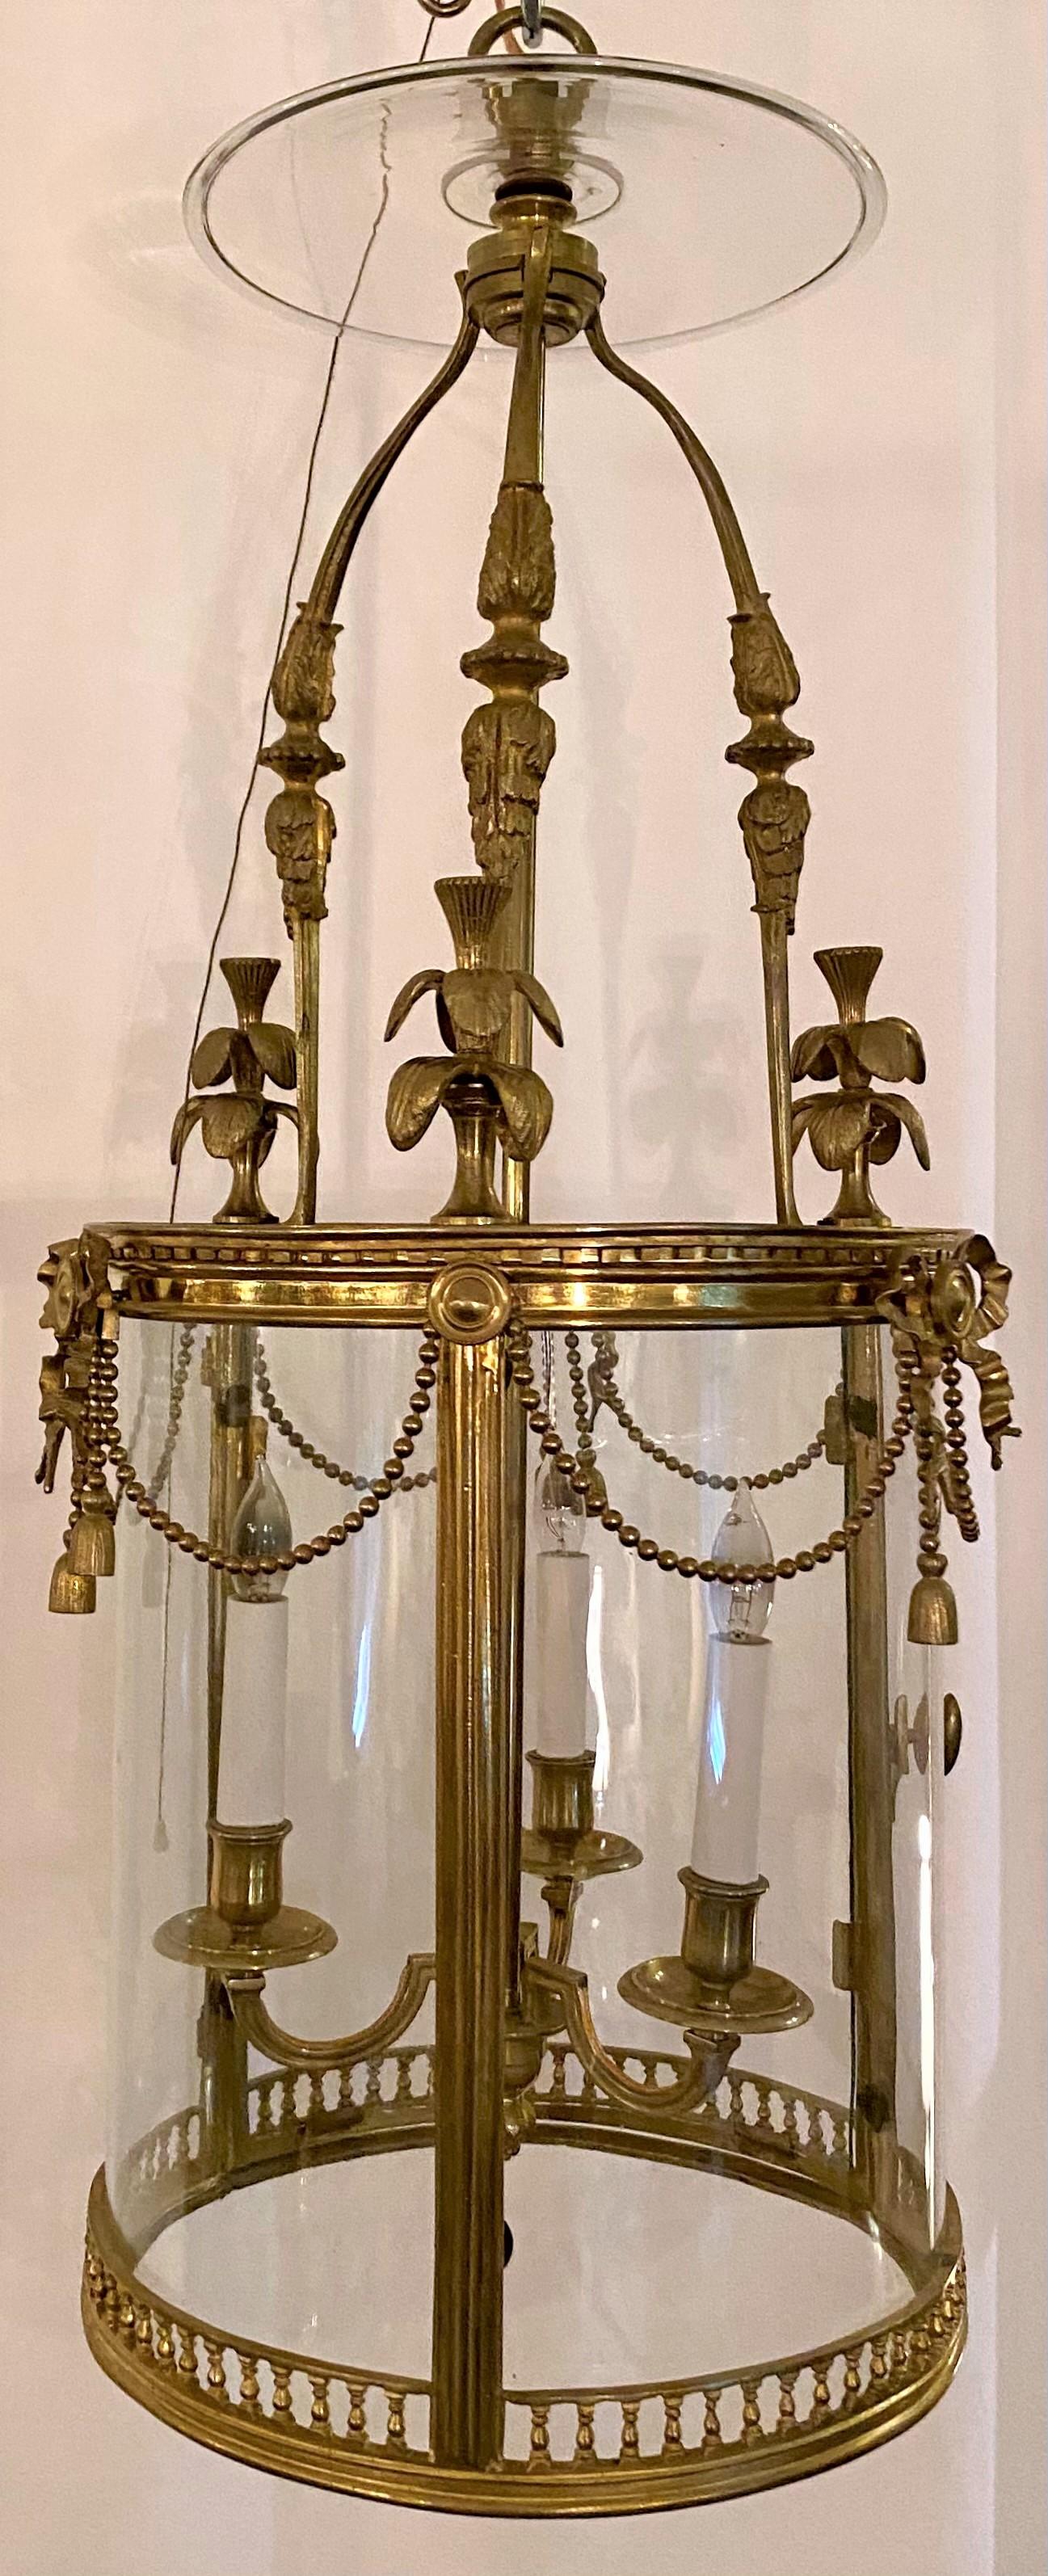 Antique Louis XVI fine gold bronze hall lantern, circa 1880-1890.
LAN070.